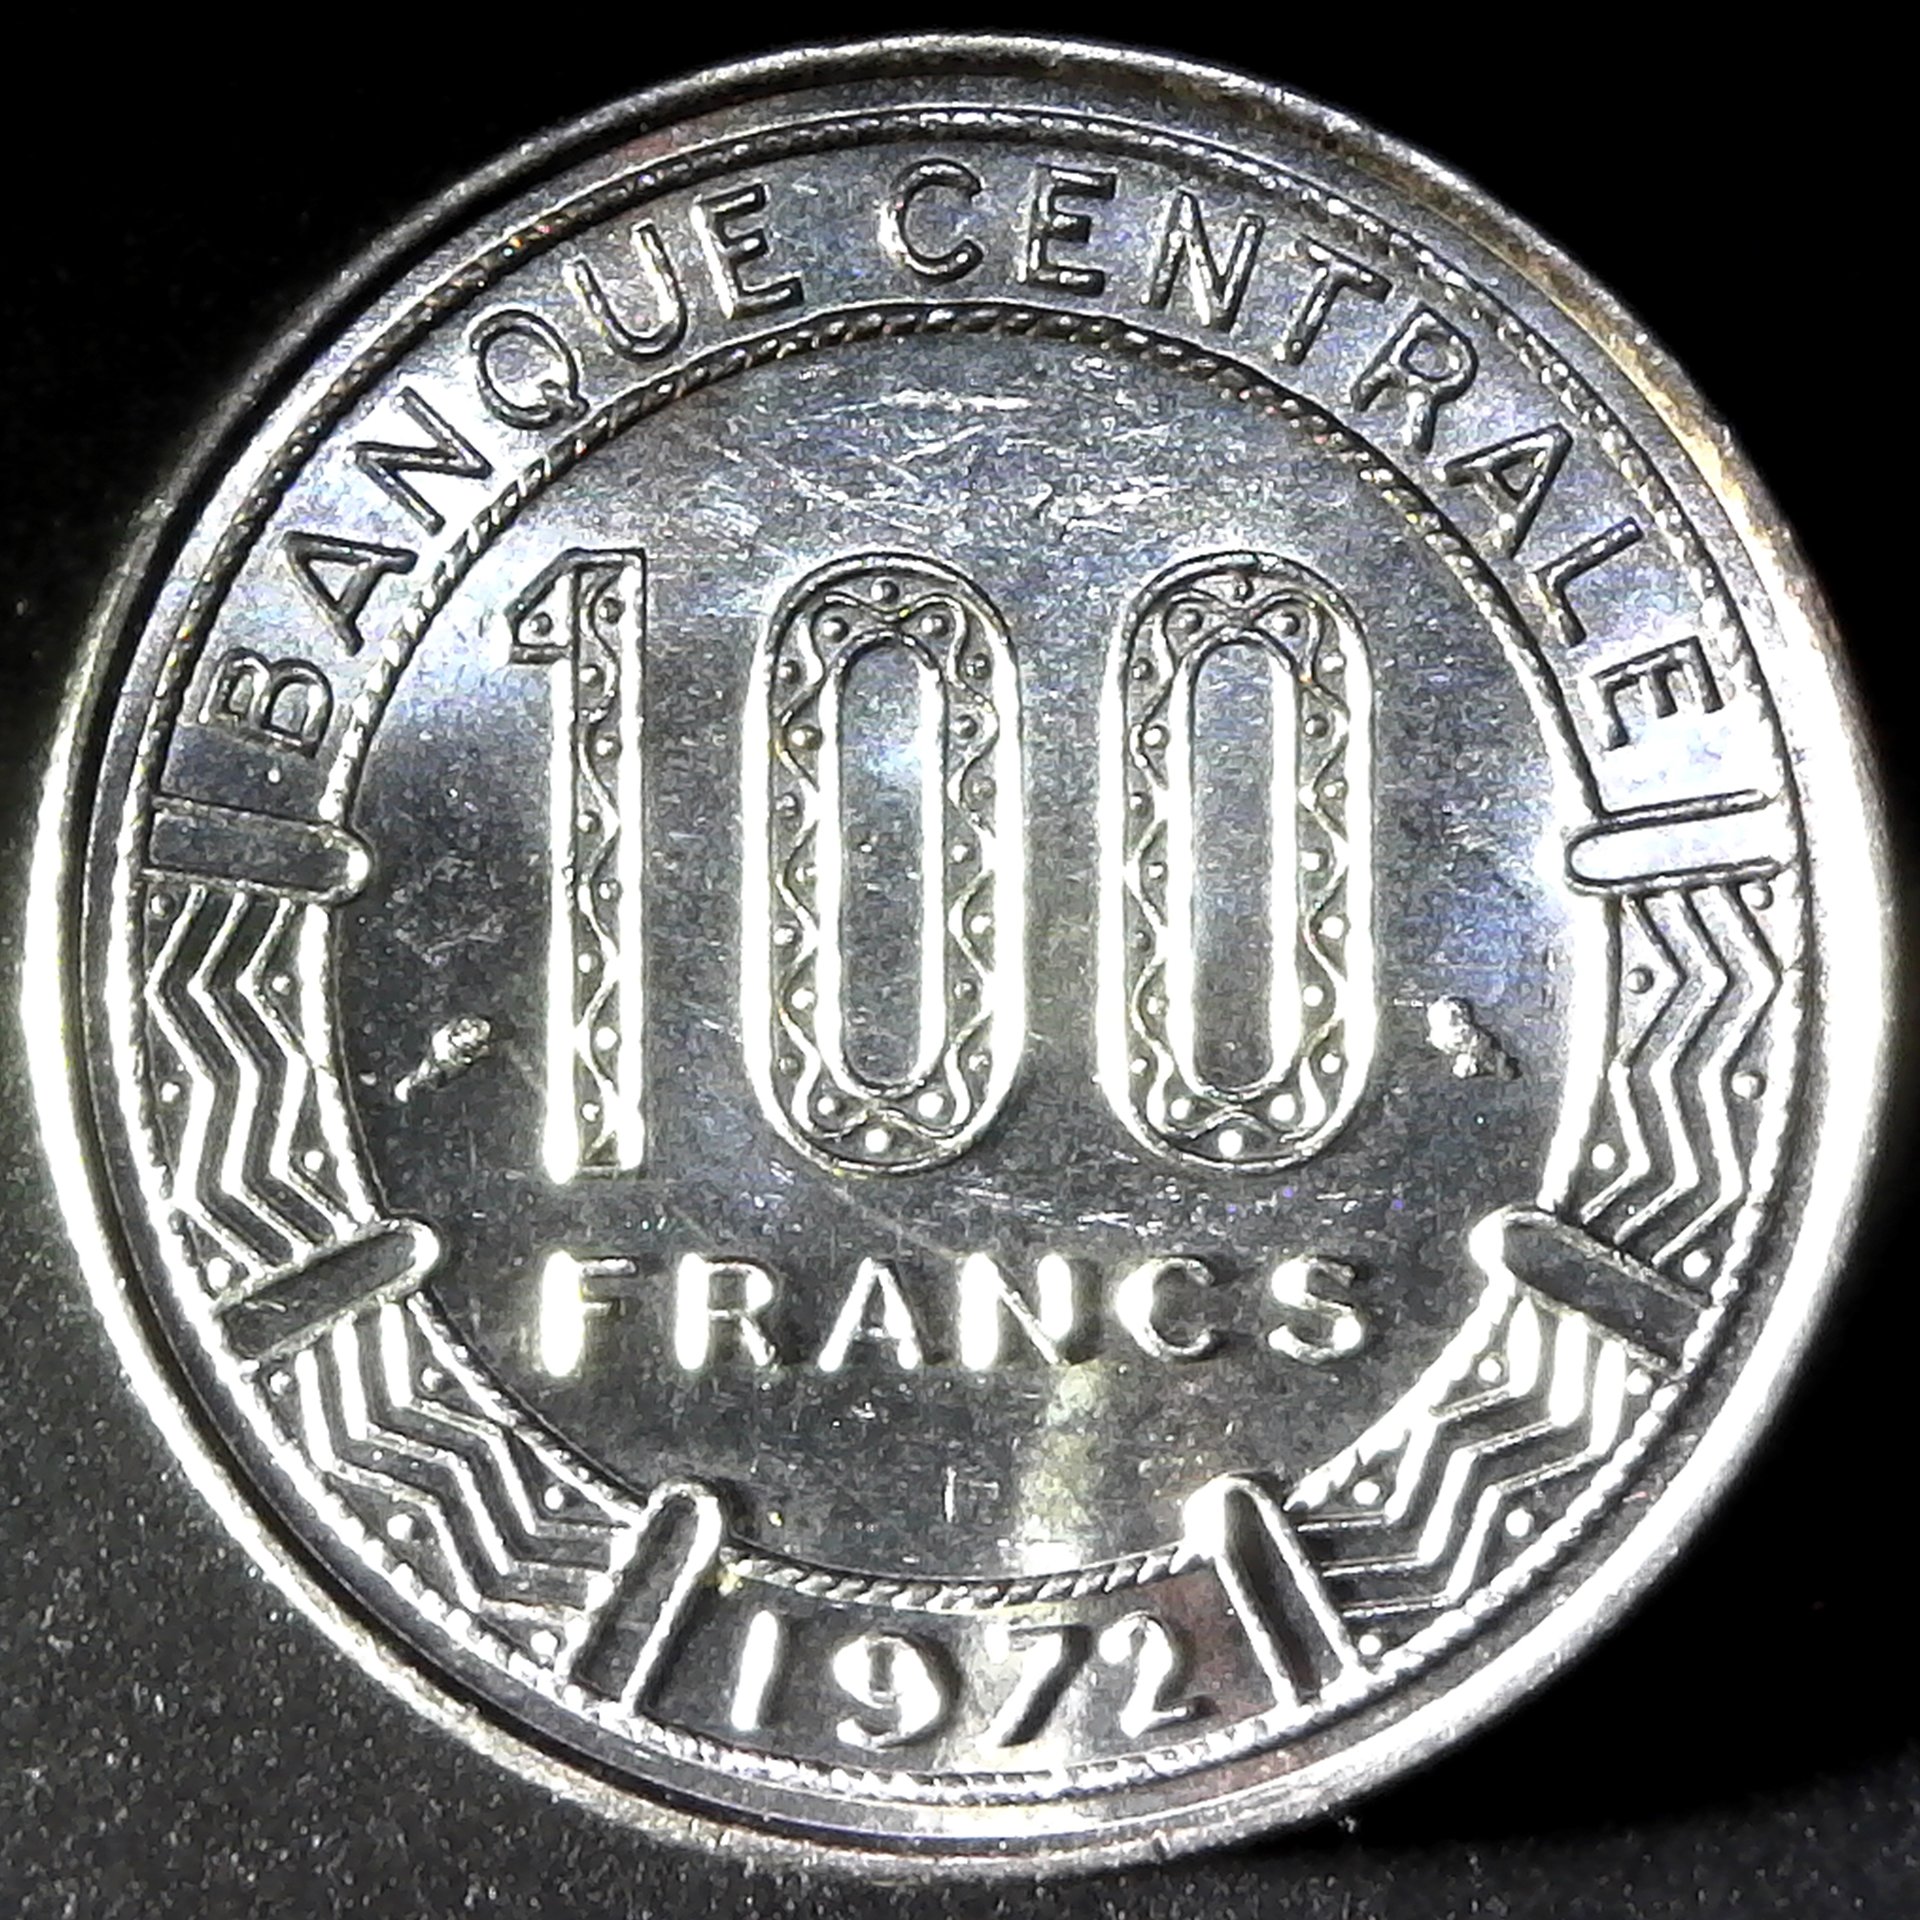 Gabon 100 Francs 1972 obv.jpg